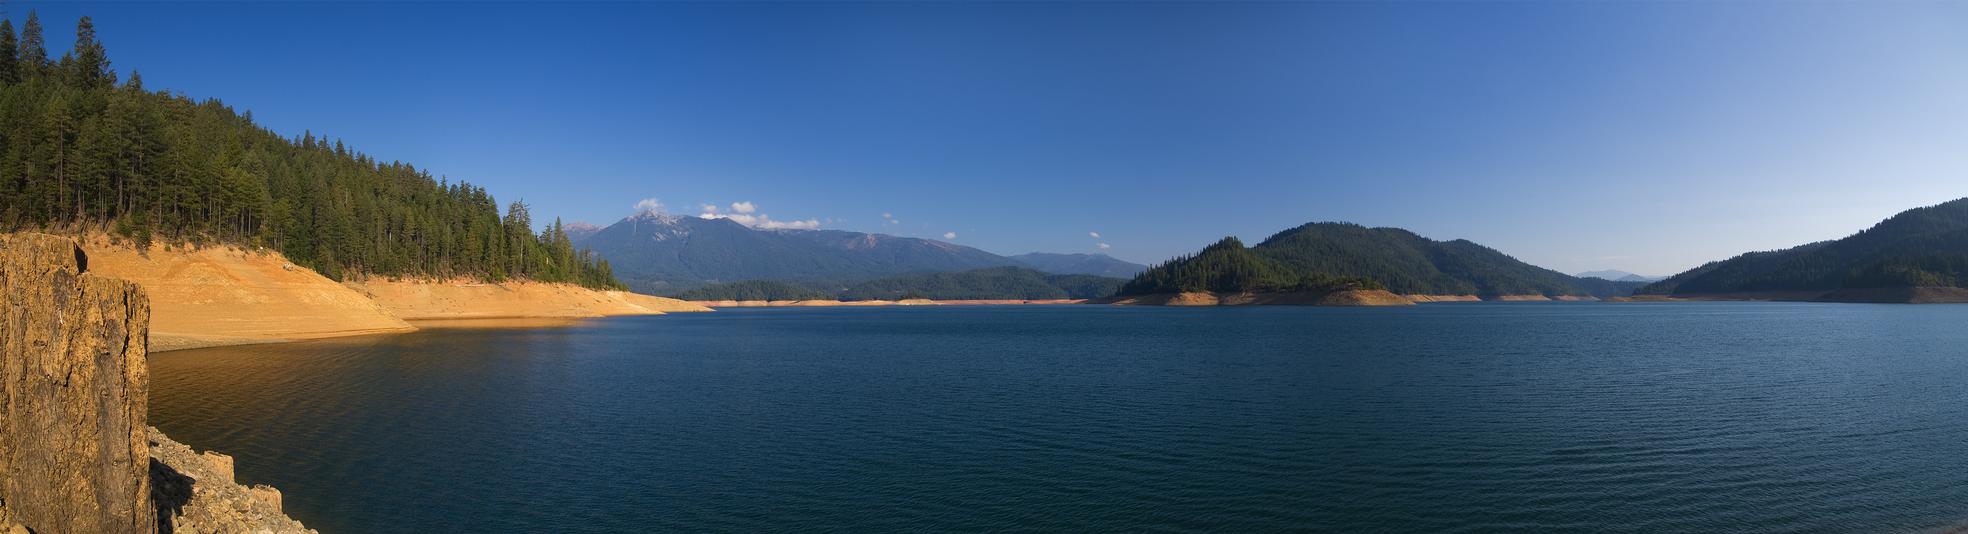 Trinity Lake